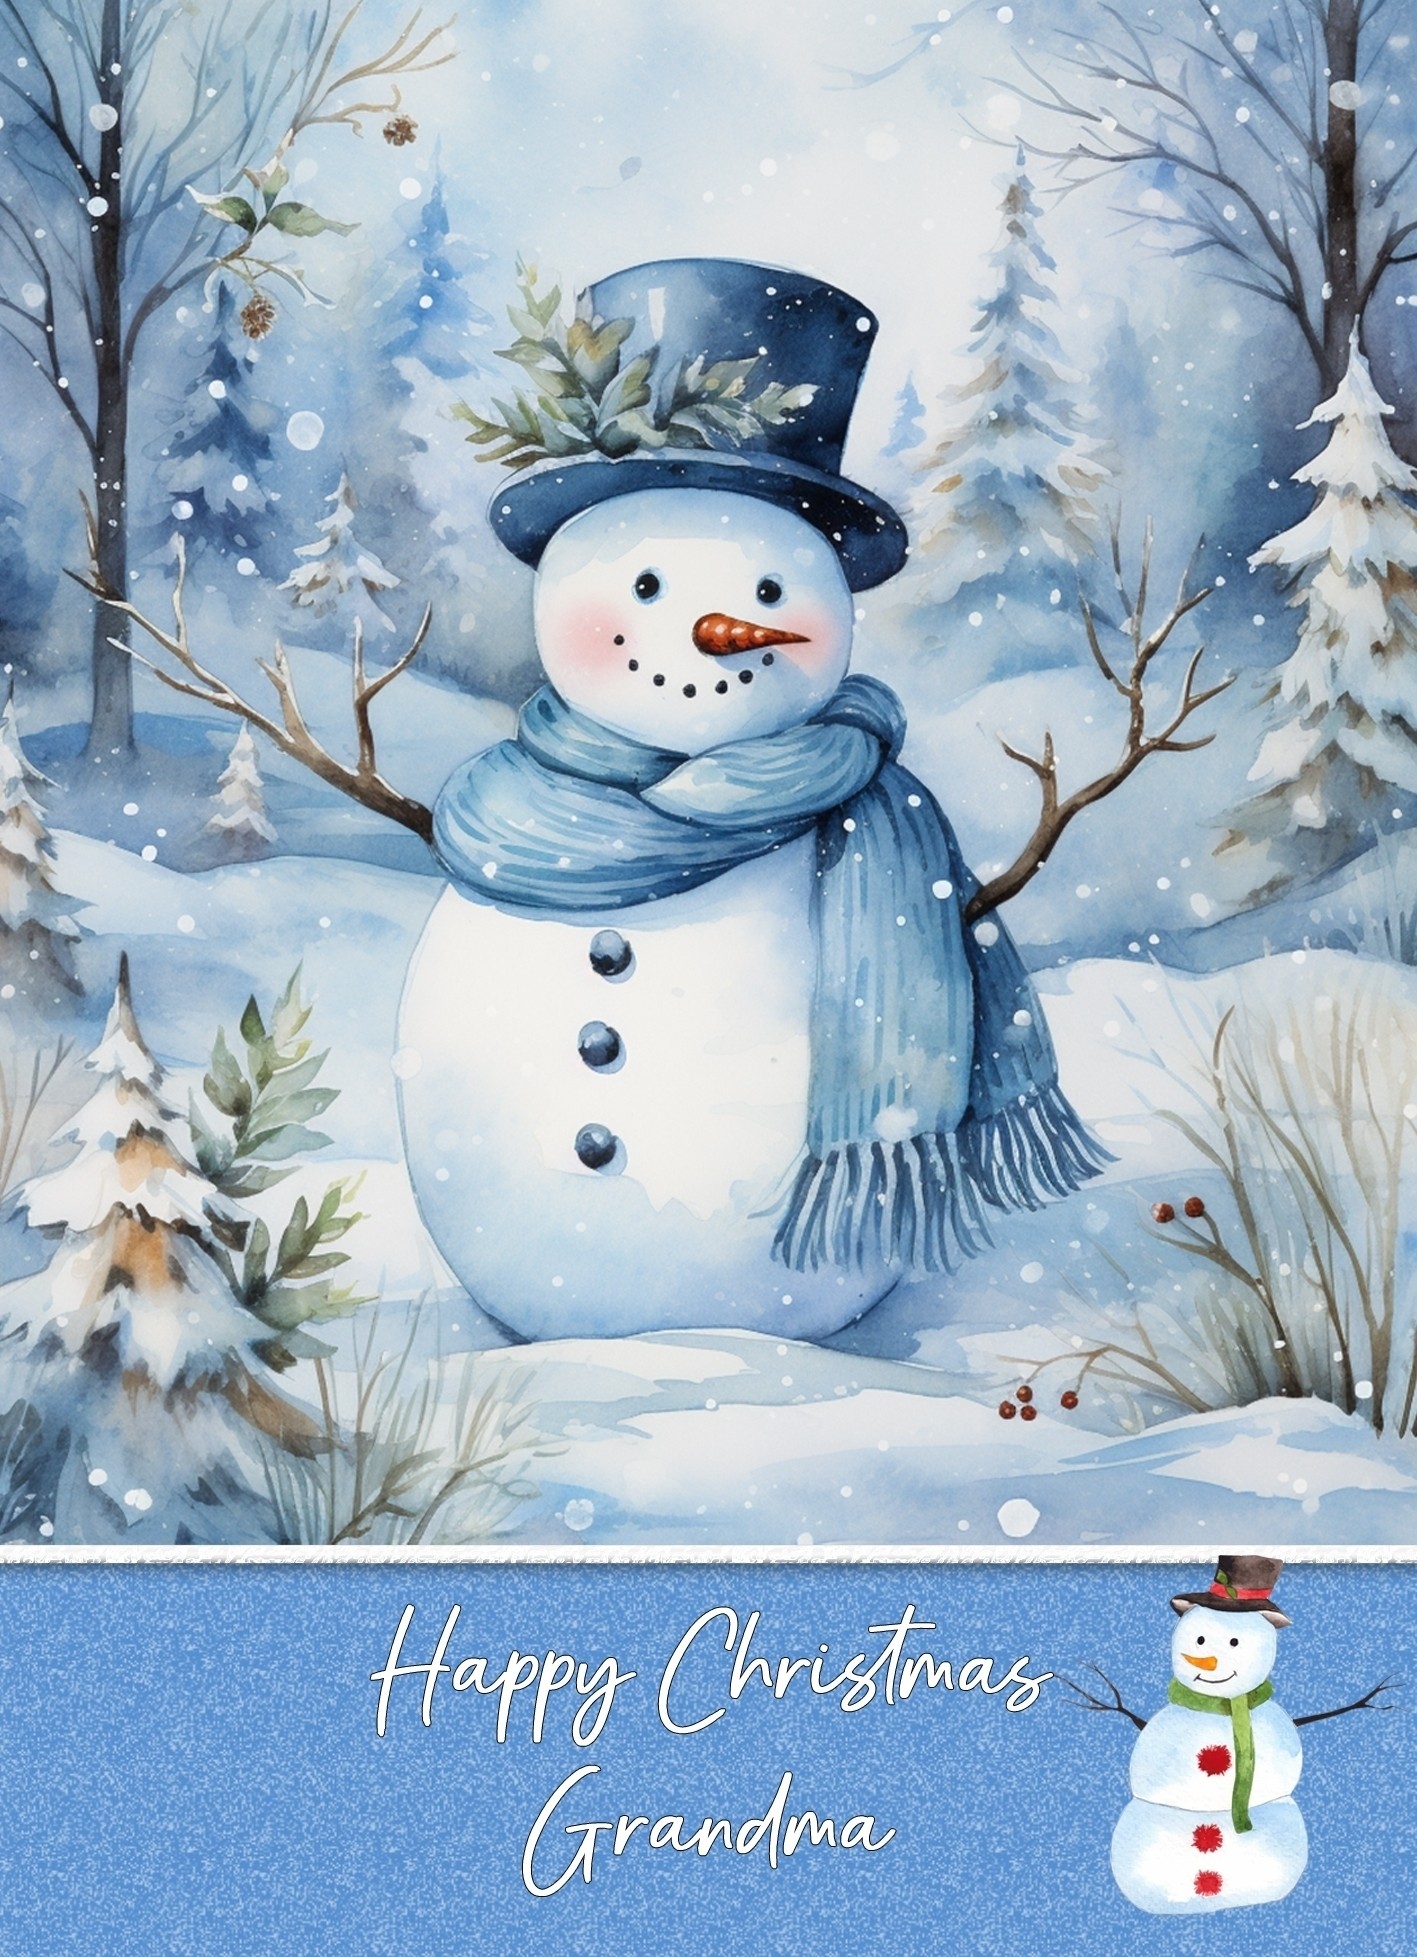 Christmas Card For Grandma (Snowman, Design 8)